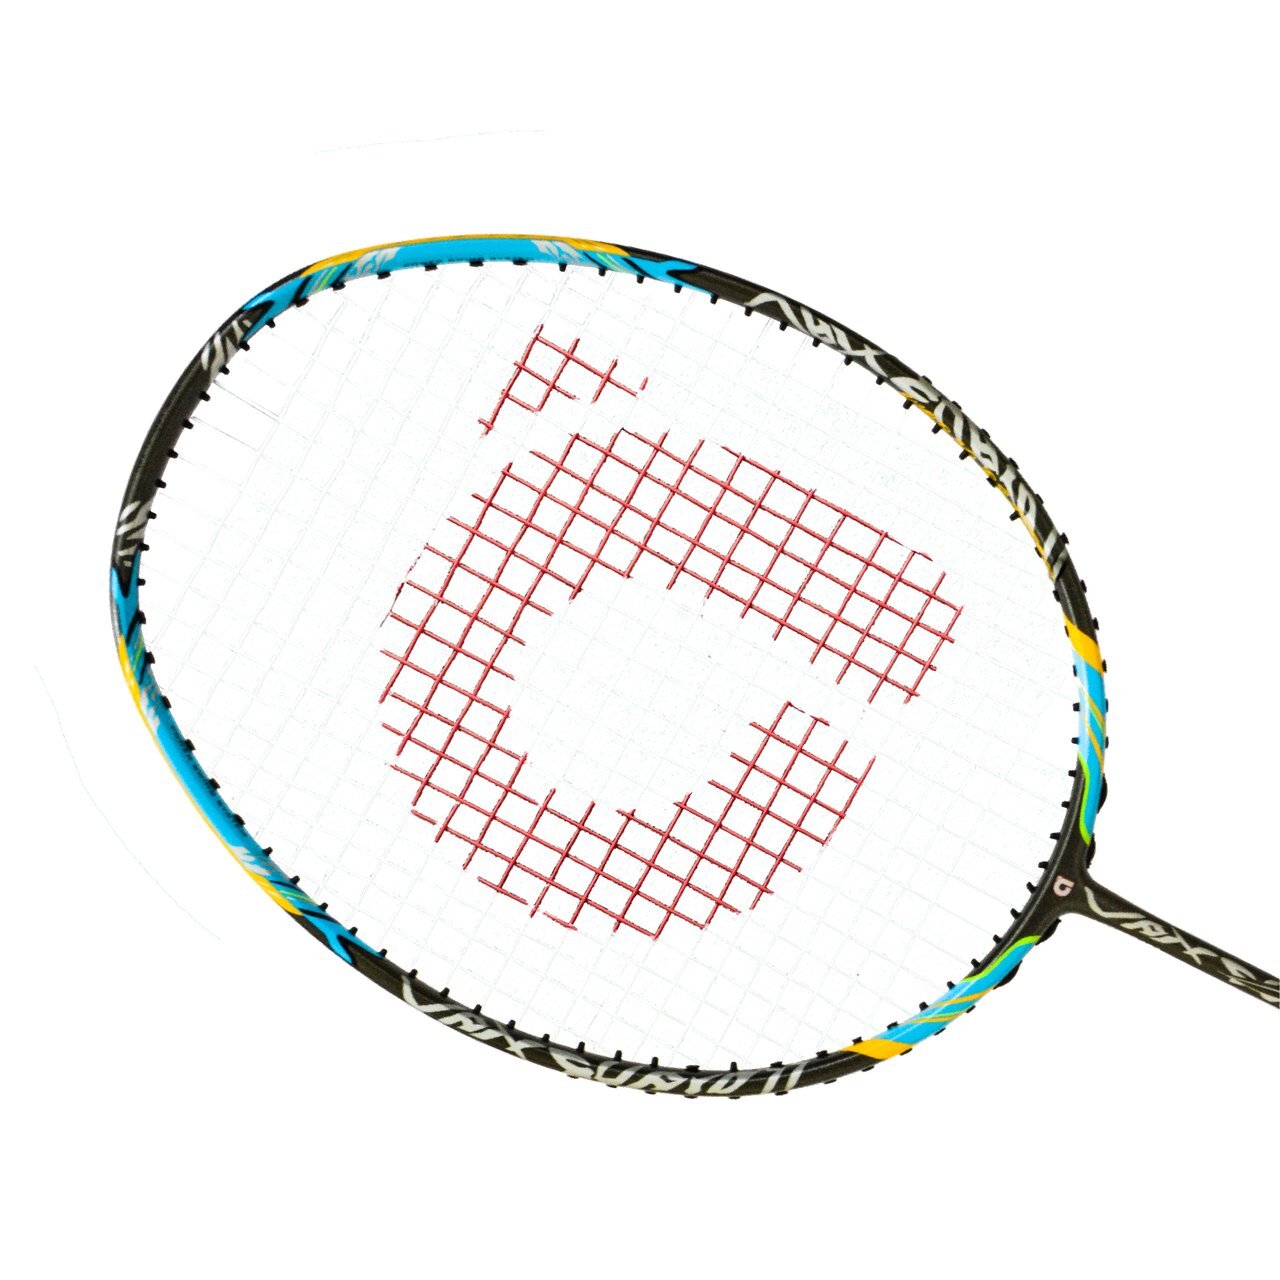 APACS Vanguard 77 Badminton Racket